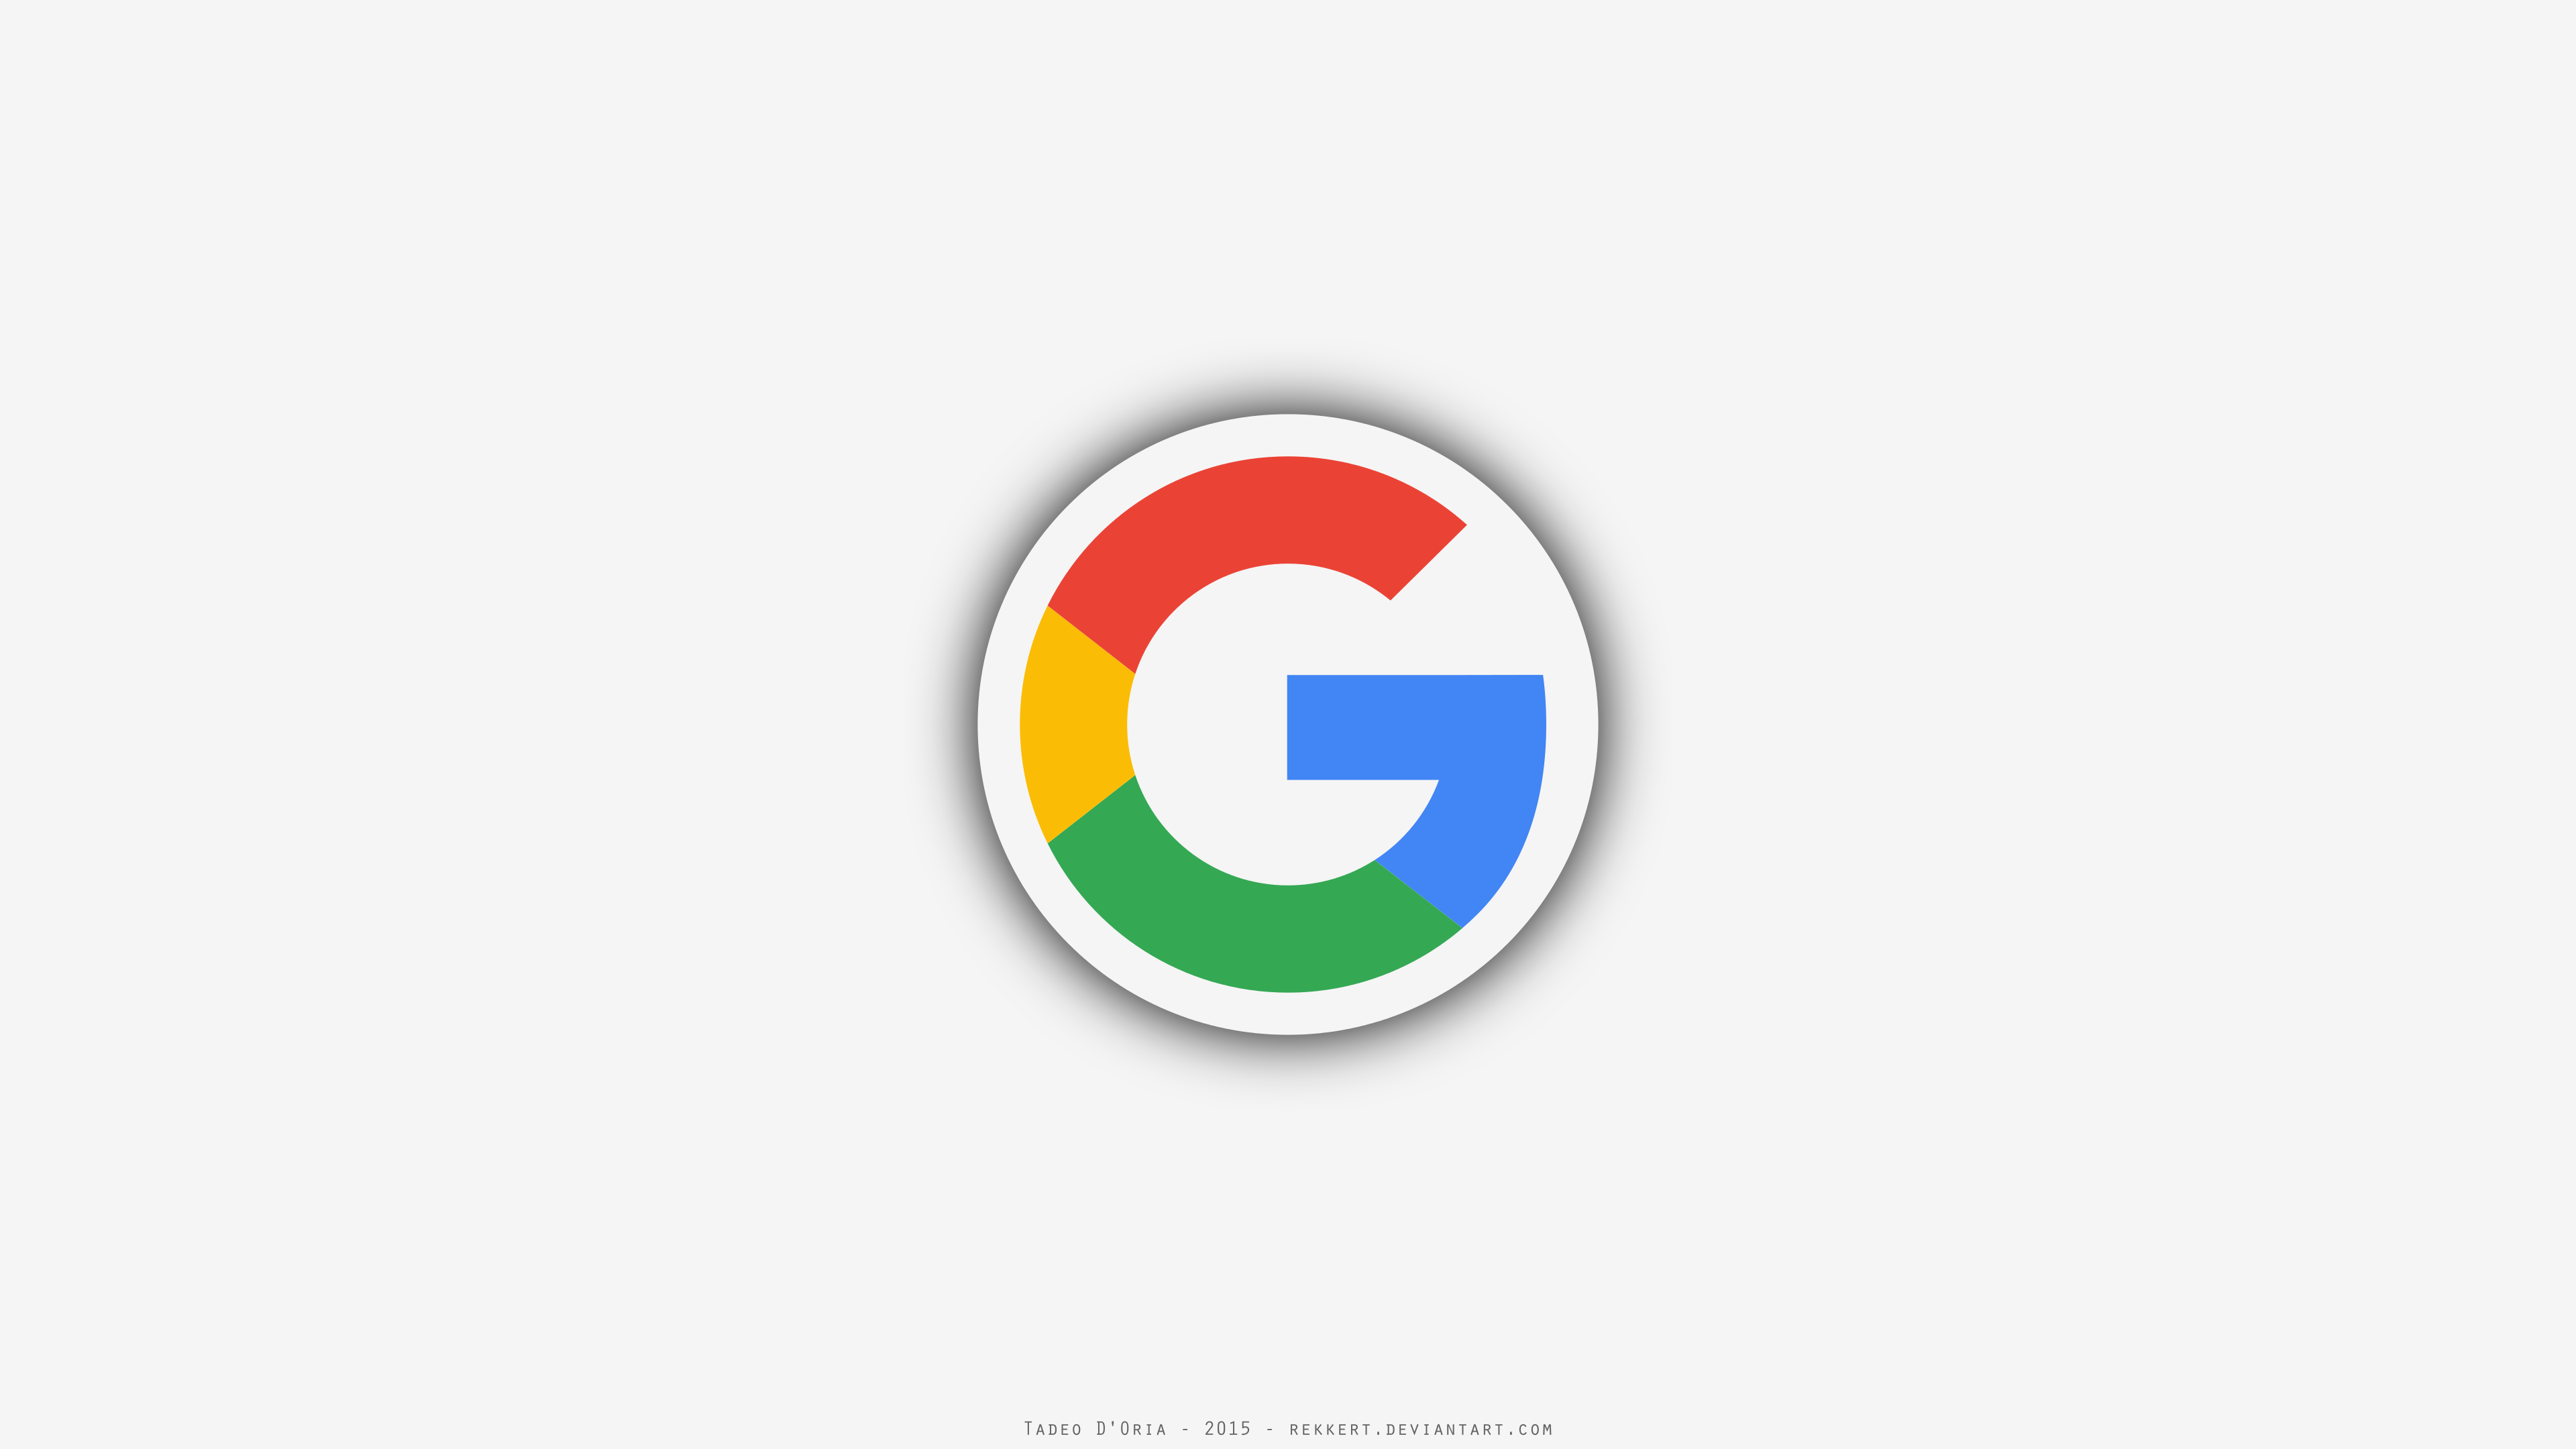 google logo download